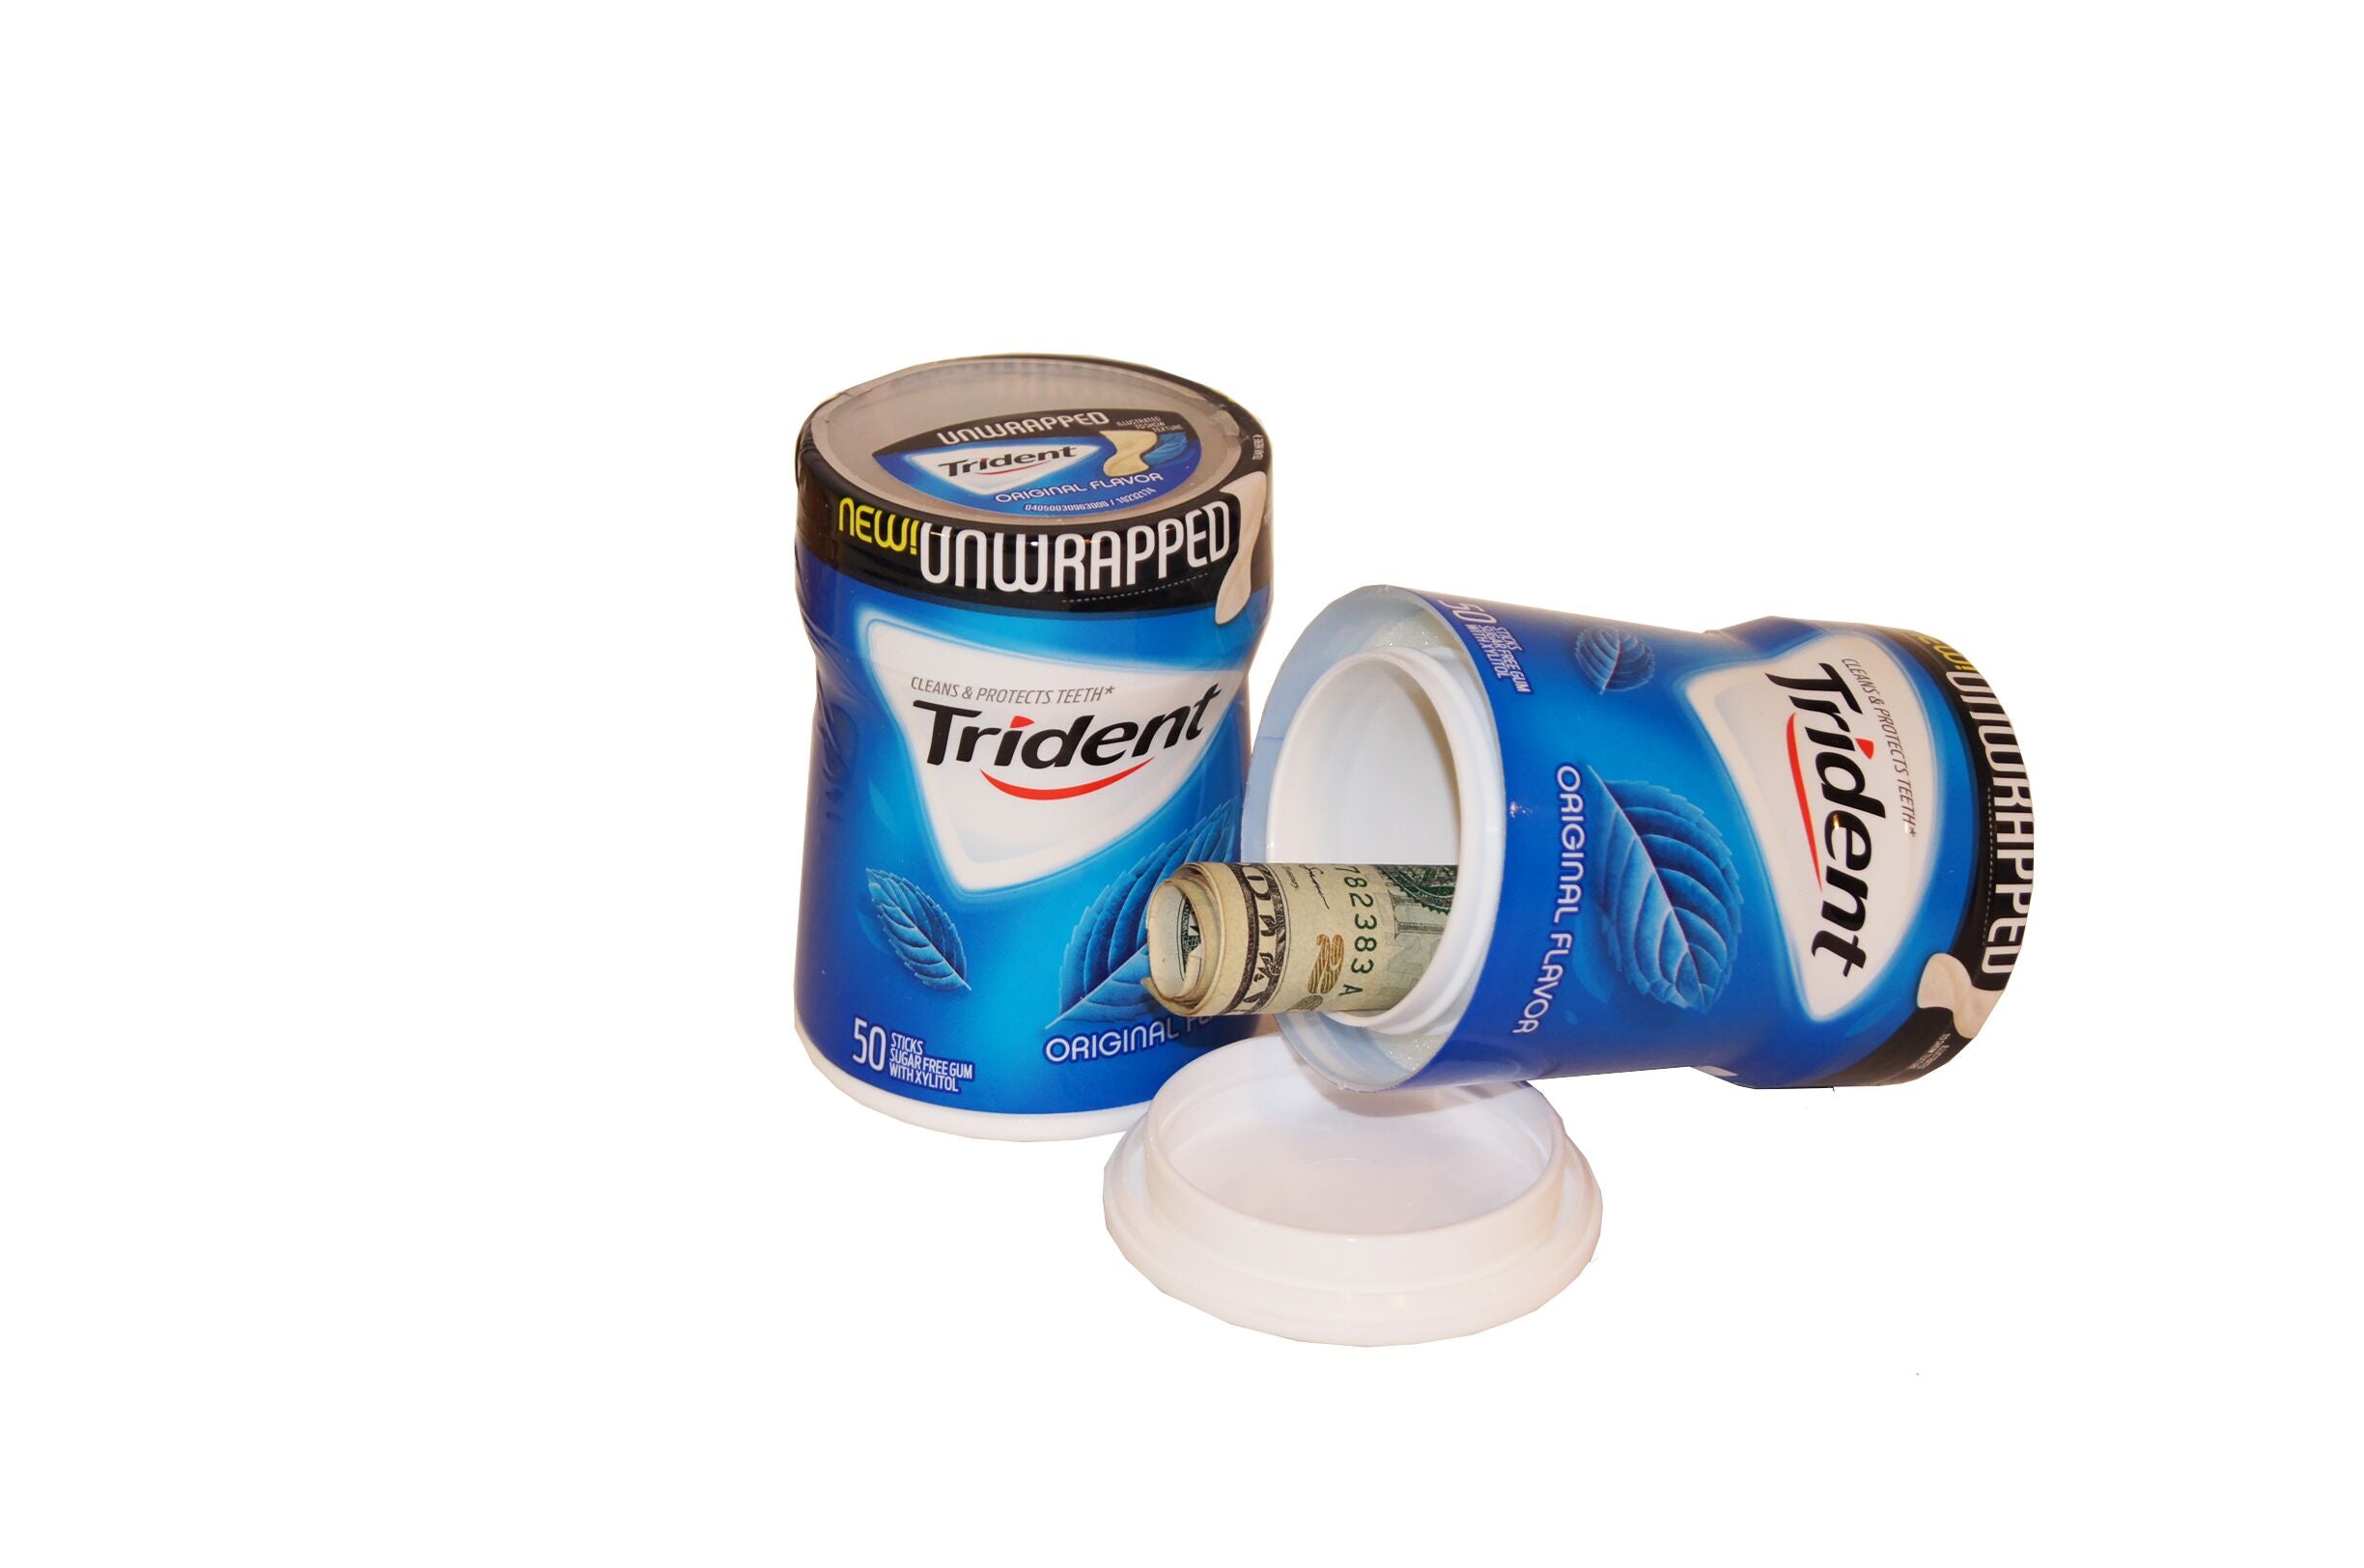 Trident Gum Diversion Safe